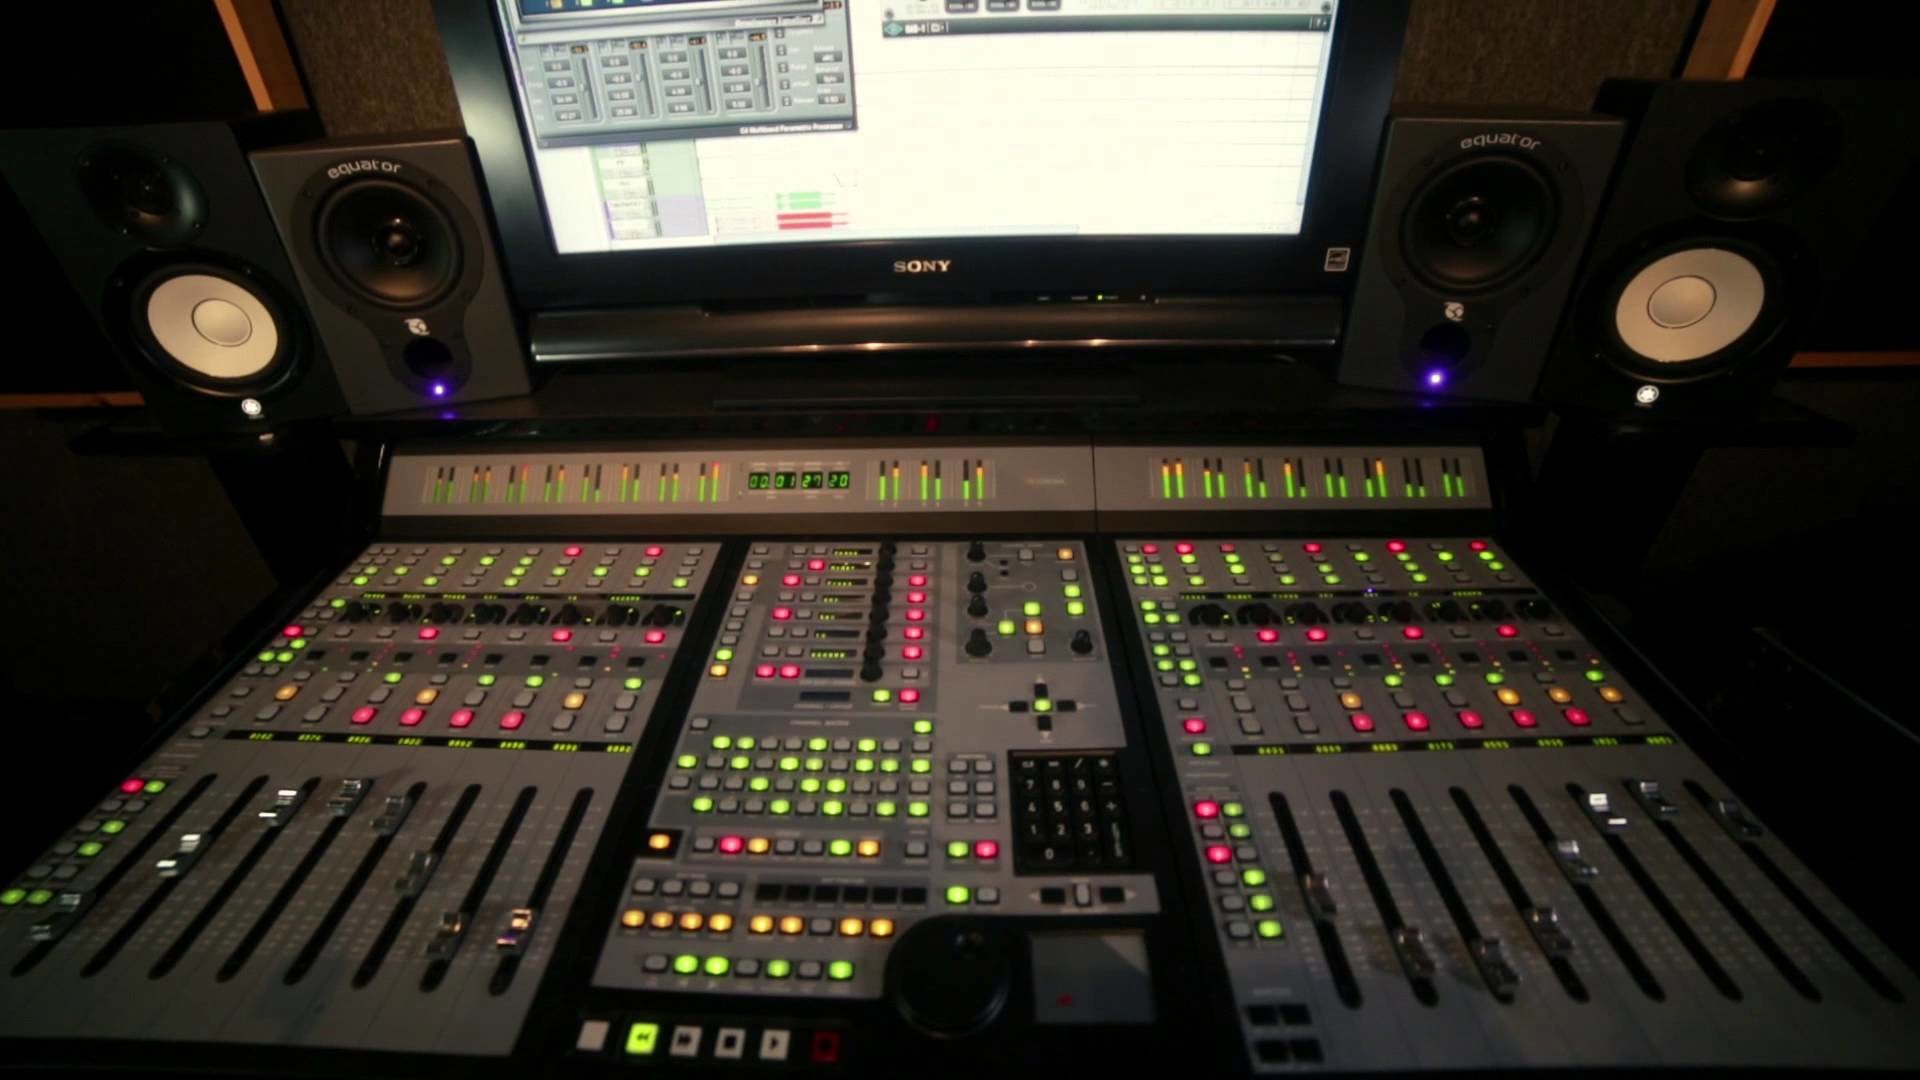 NJ Recording Studio Record With Us Perth Amboy, NJ 732 646 8775 – YouTube